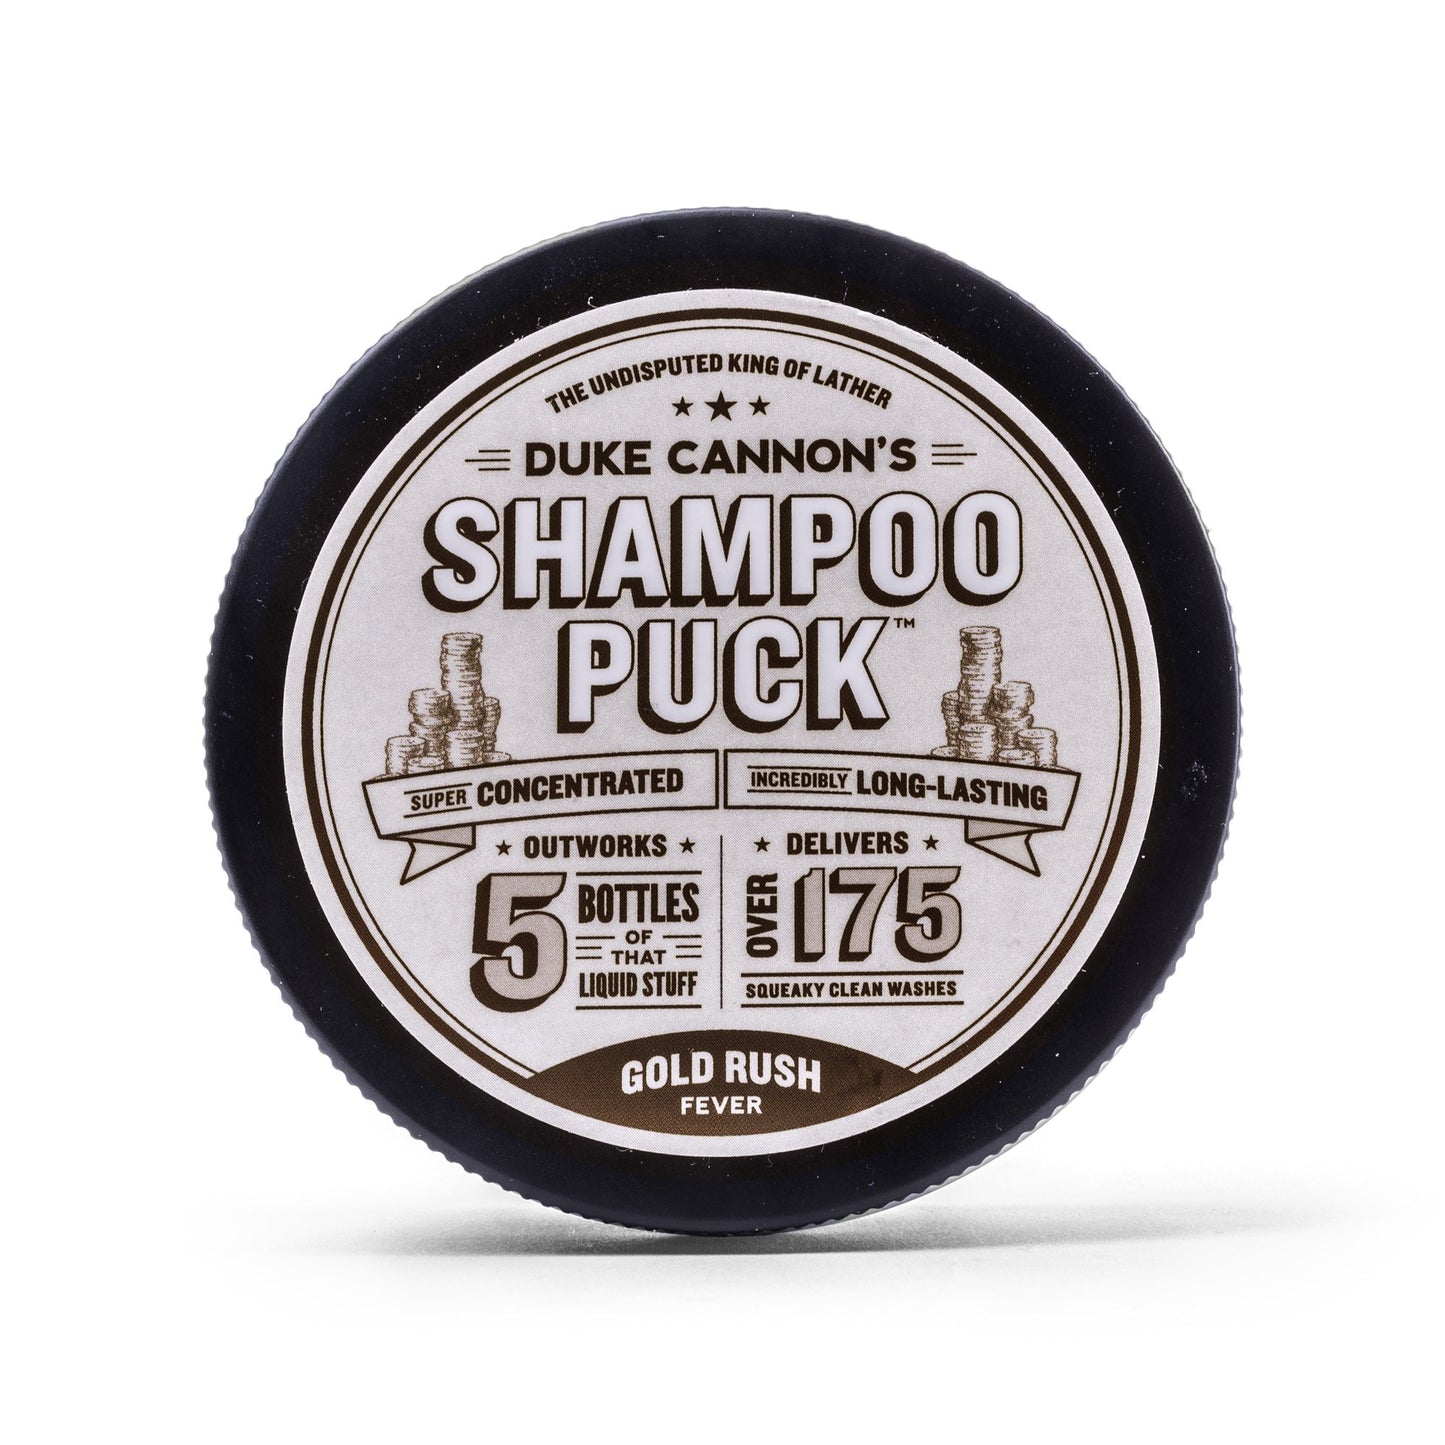 Shampoo Puck Gold Rush Fever